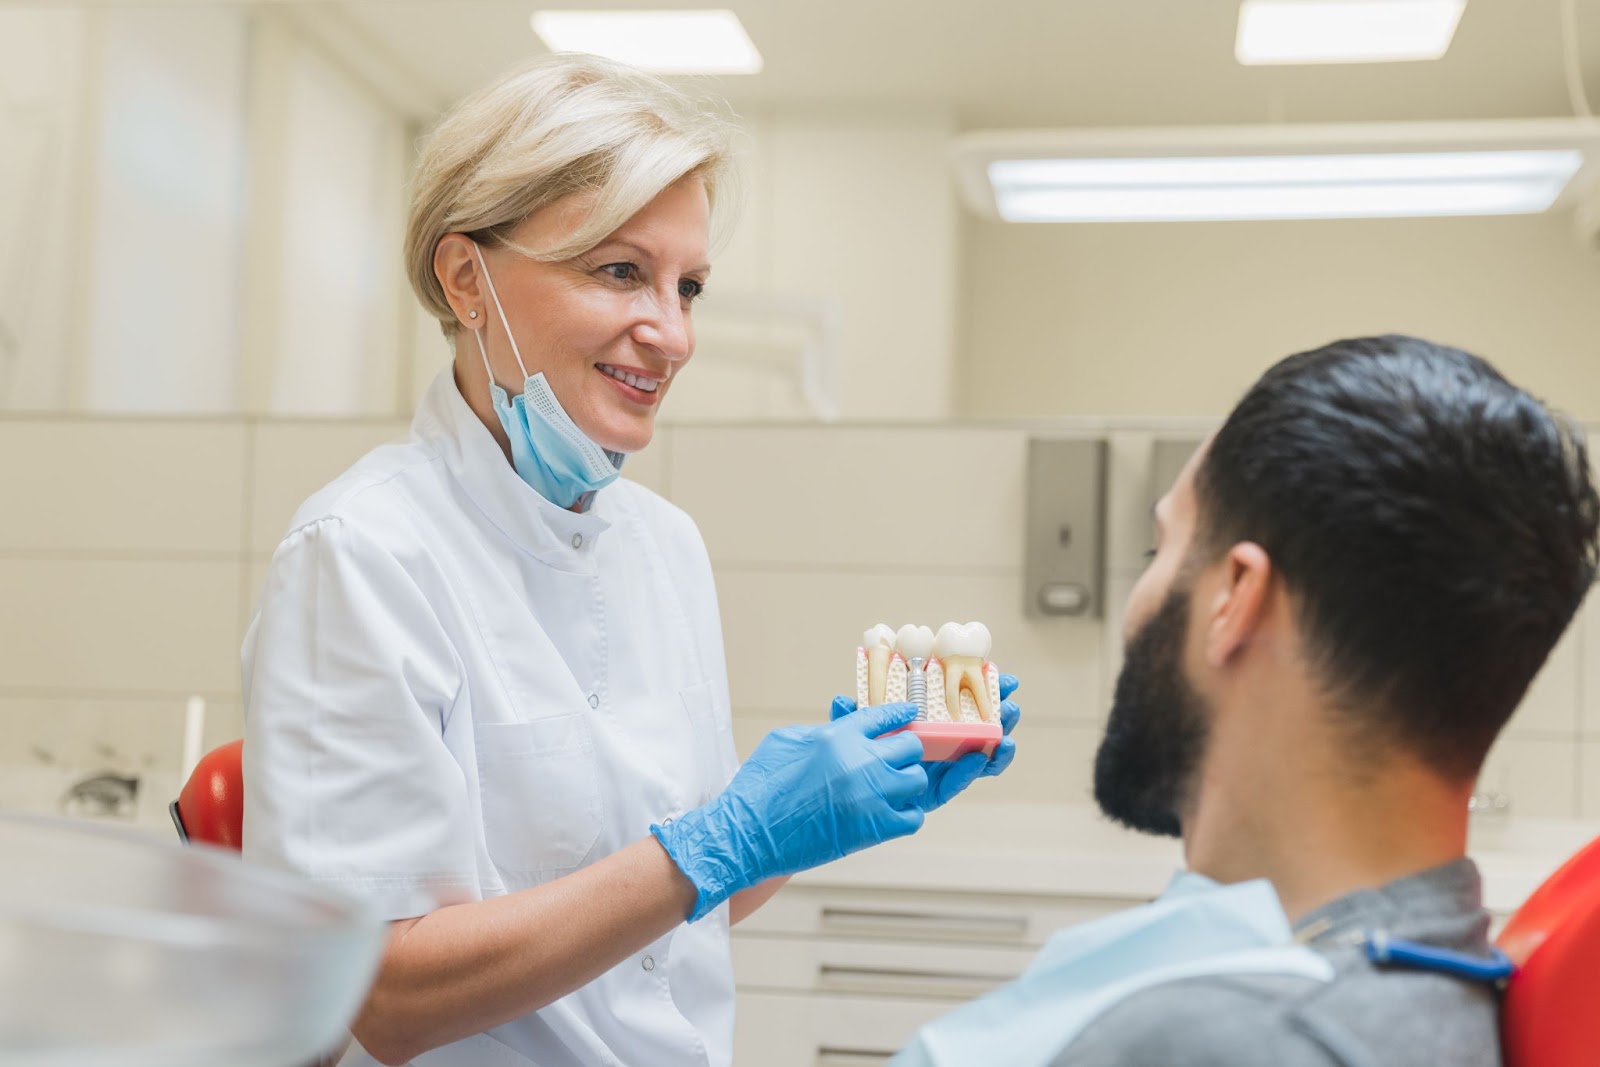 Dentist showing teeth implant procedure to patient